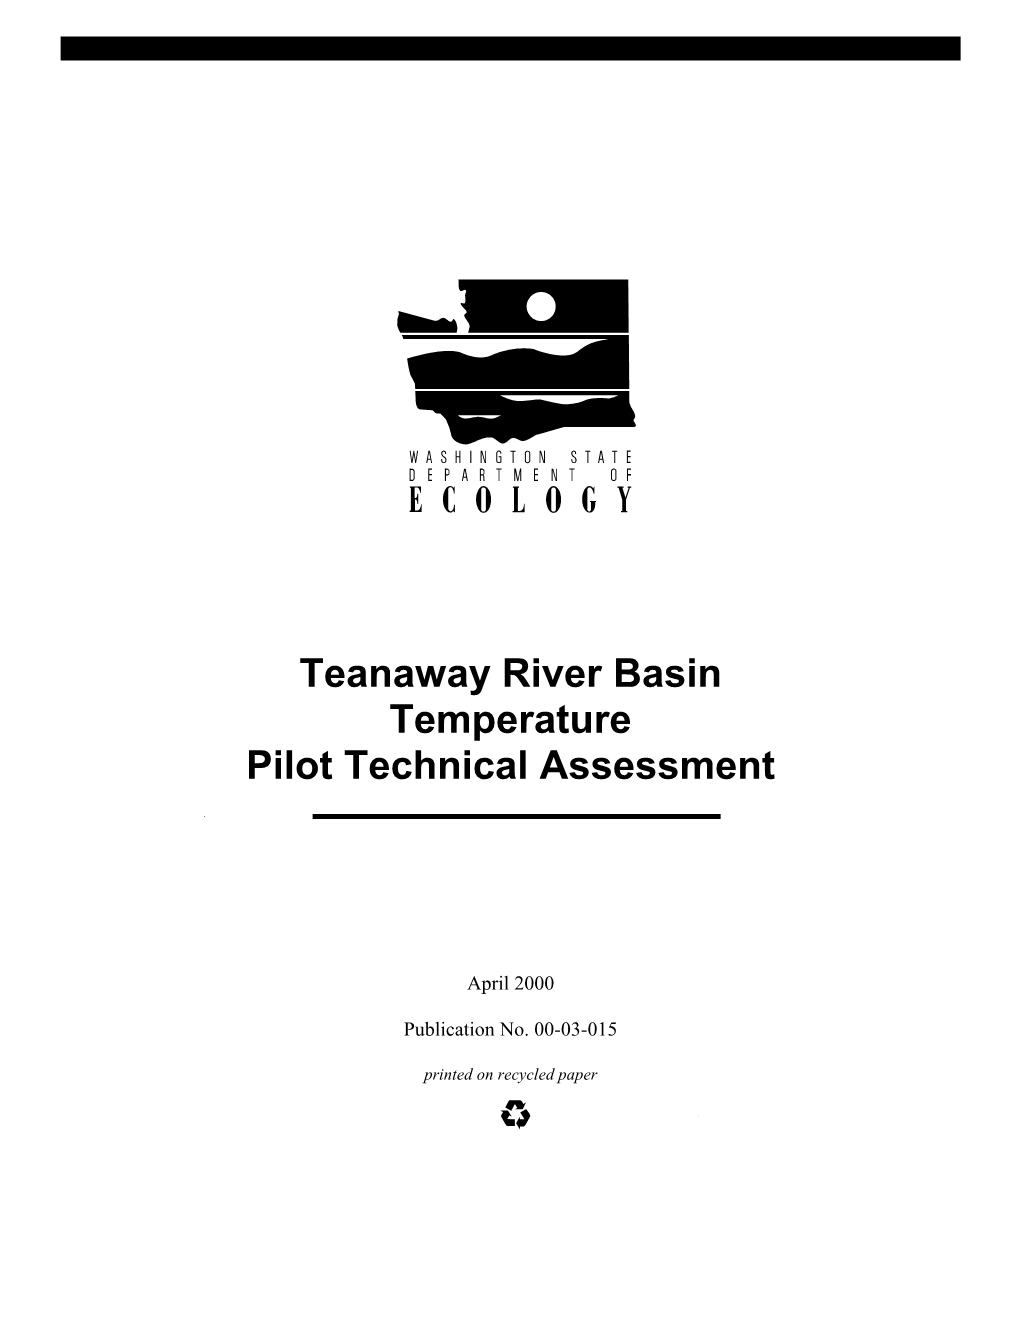 Teanaway River Basin Temperature Pilot Technical Assessment